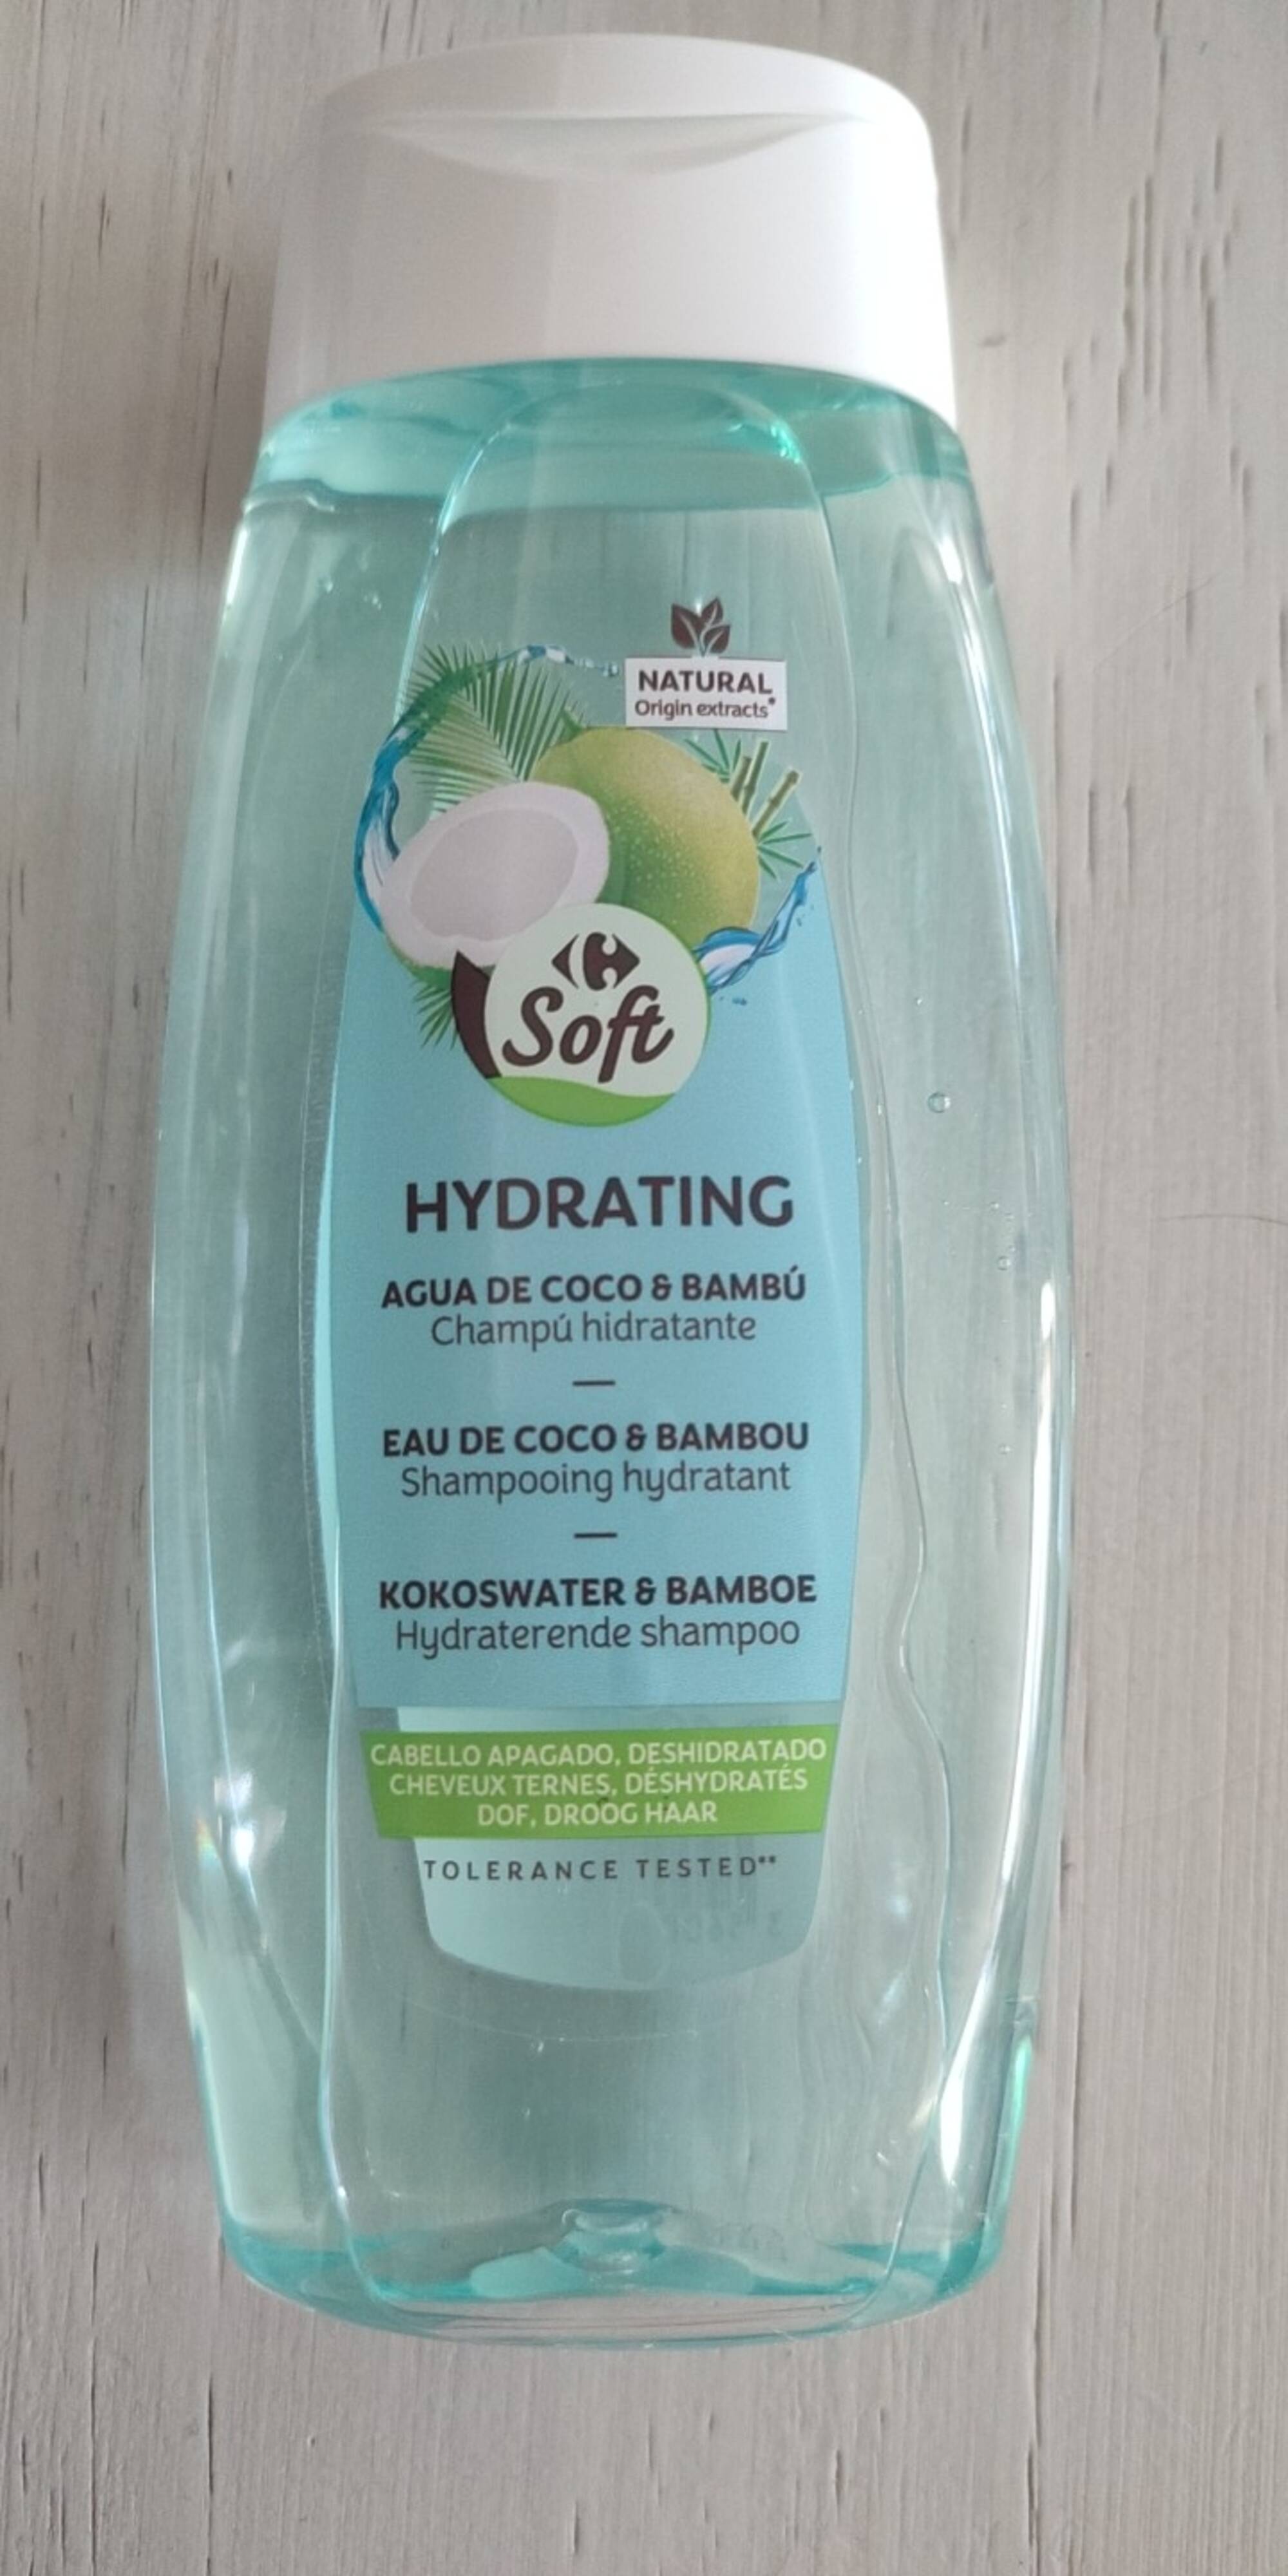 CARREFOUR SOFT - Shampooing hydratant eau de coco & bambou